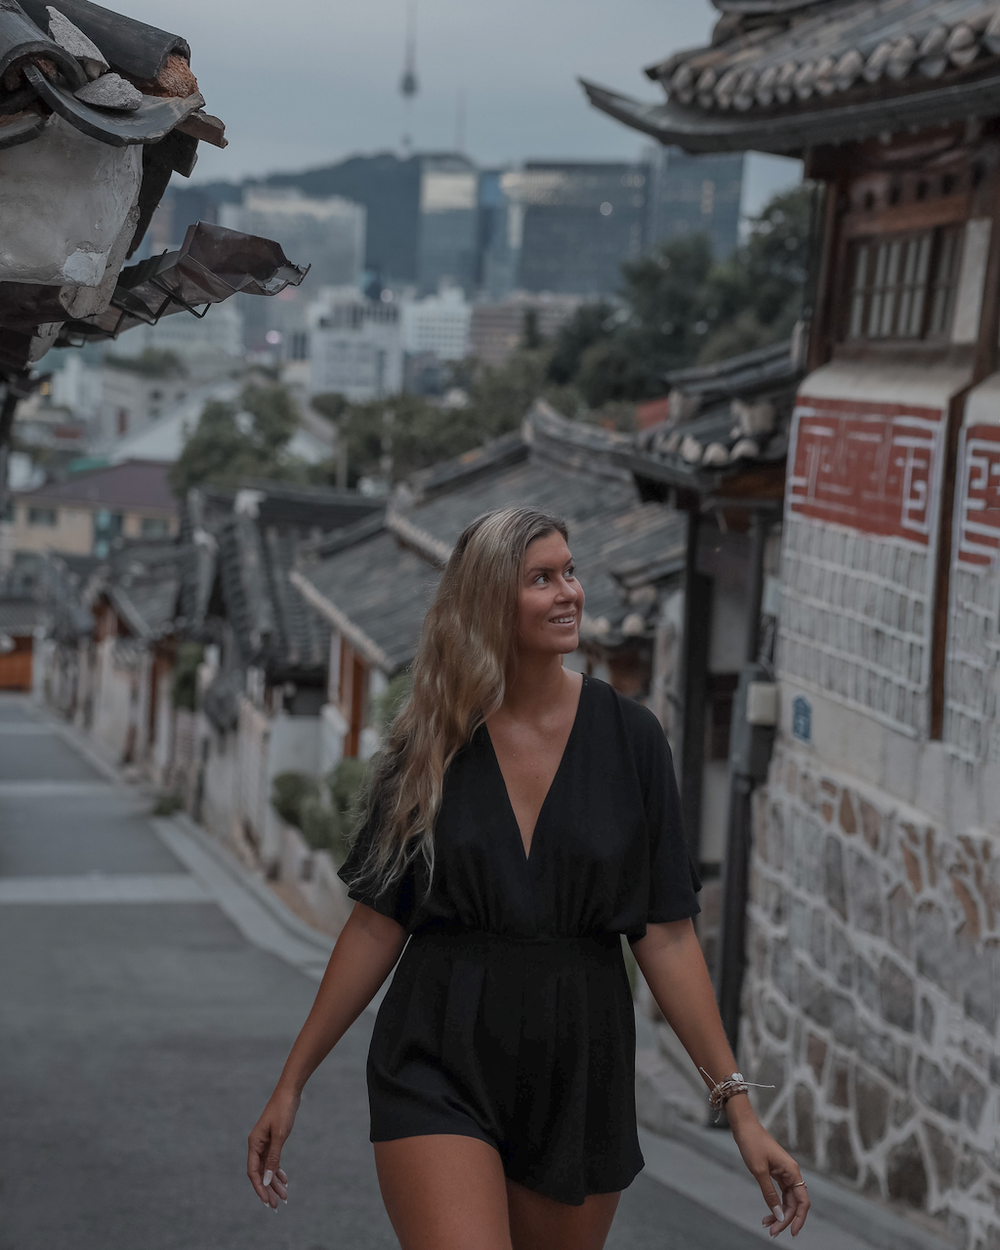 Woman wandering Bukchon Hanok village at sunrise - Seoul - South Korea